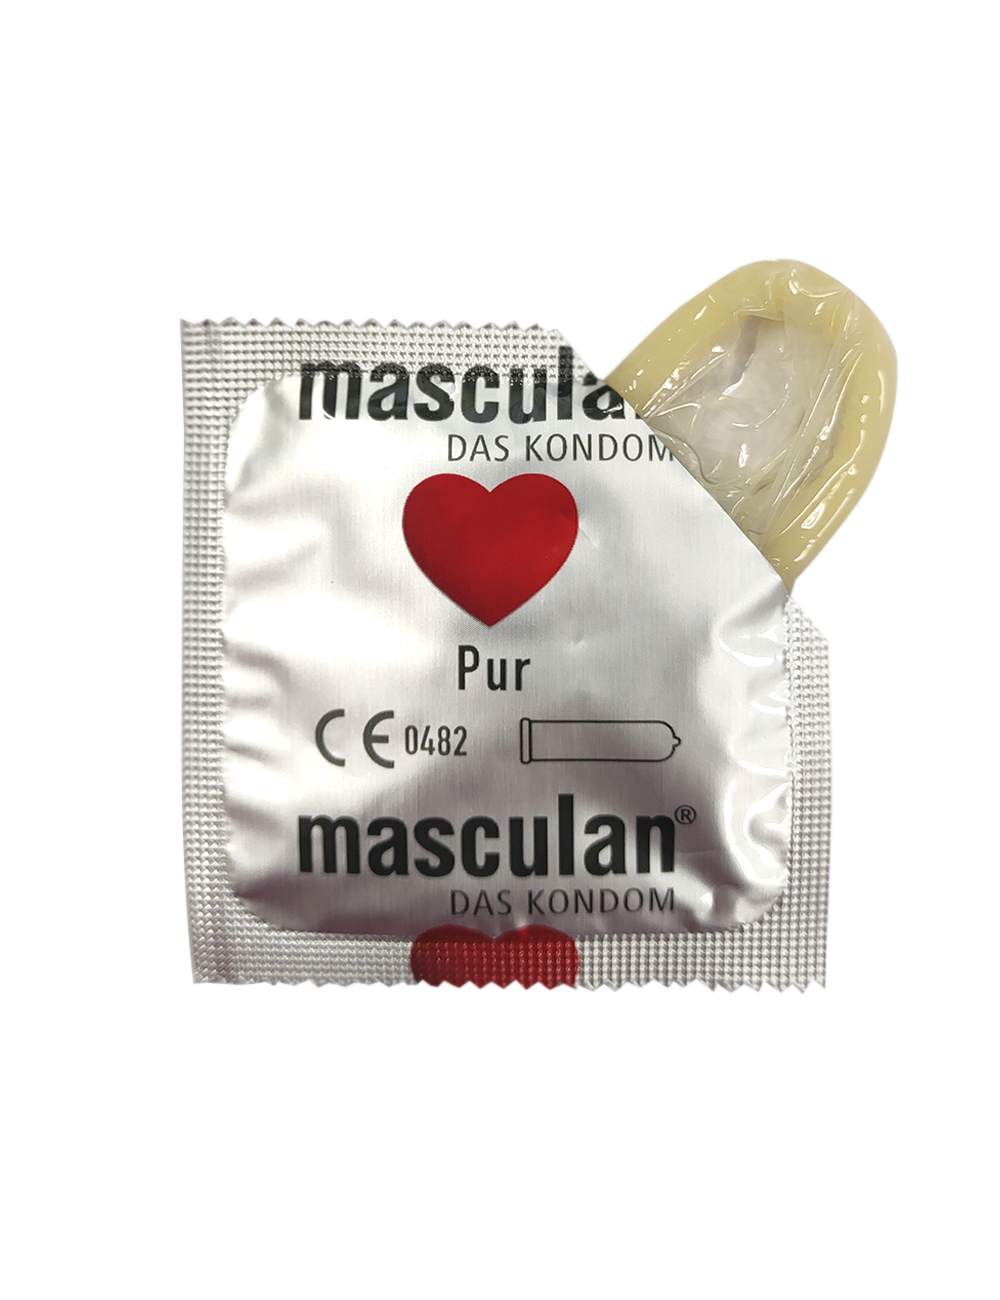 Презервативы Masculan Pur №10, ультратонкие презервативы, много смазки, 10 шт